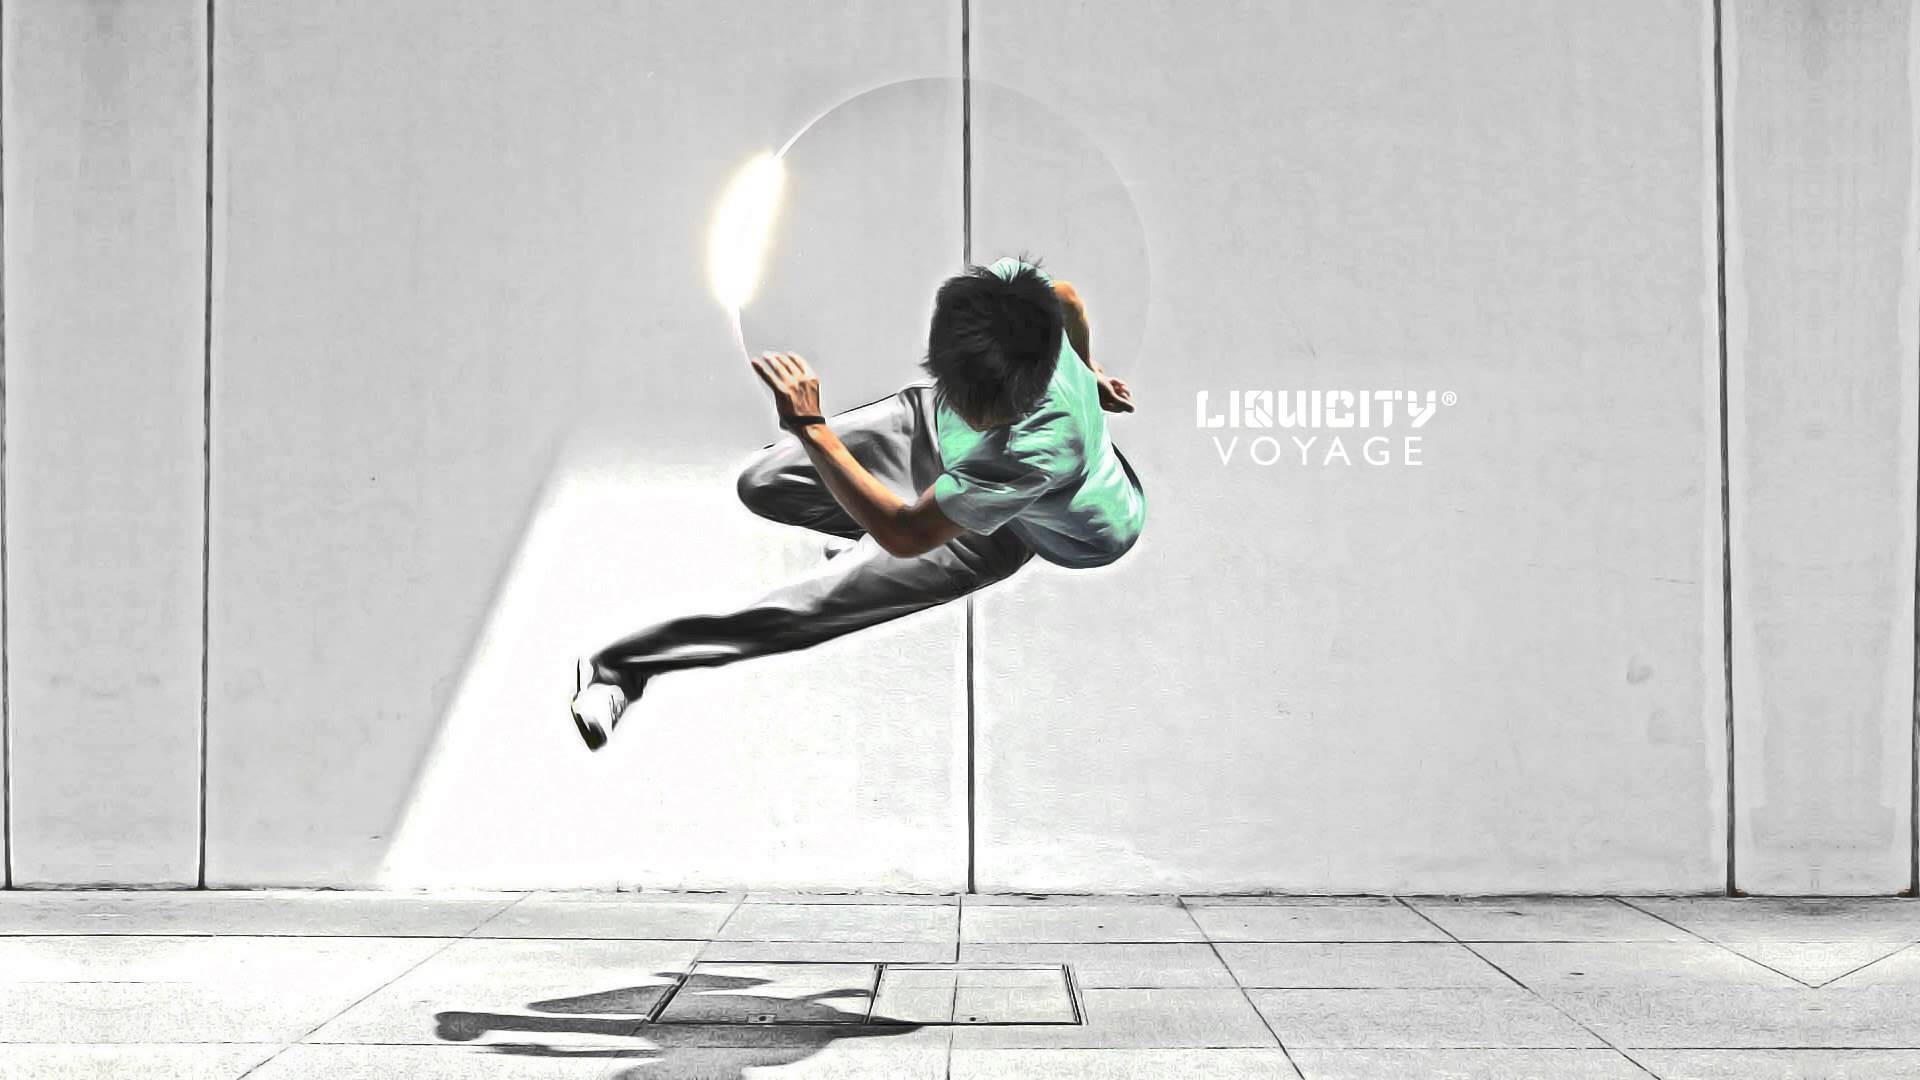 General 1920x1080 Liquicity digital art people wall shadow jumping